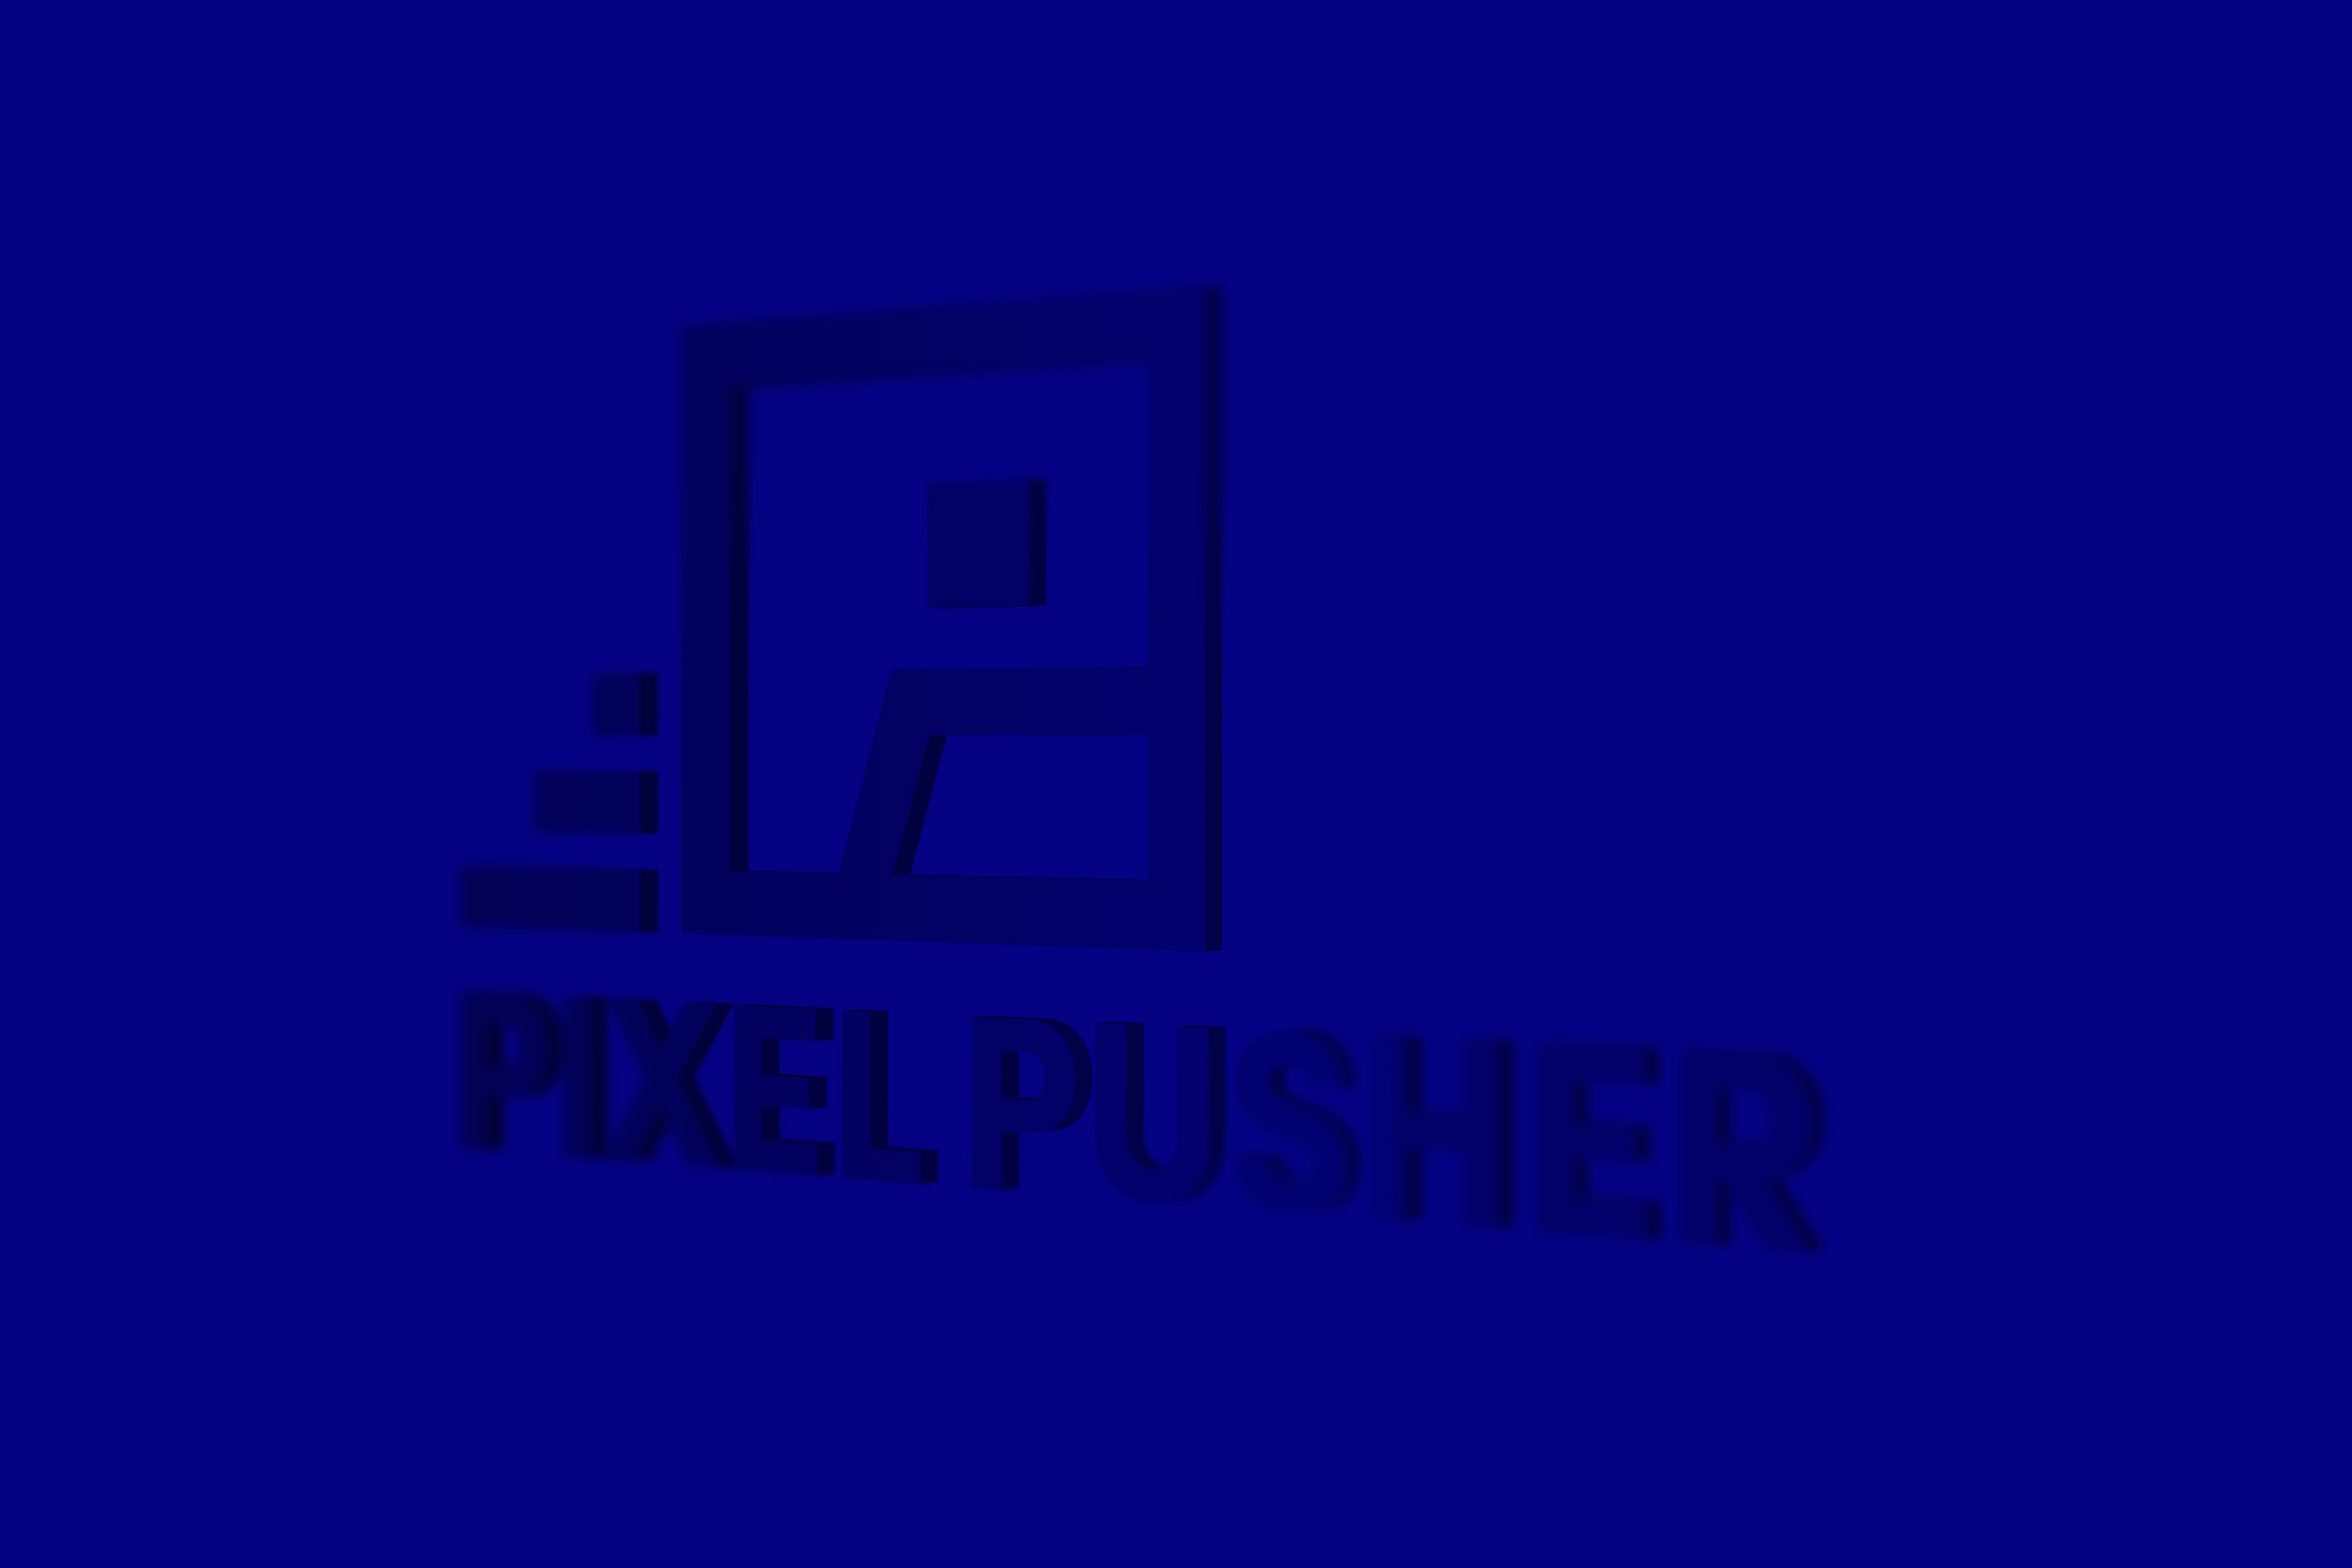 Pixel Pusher Background